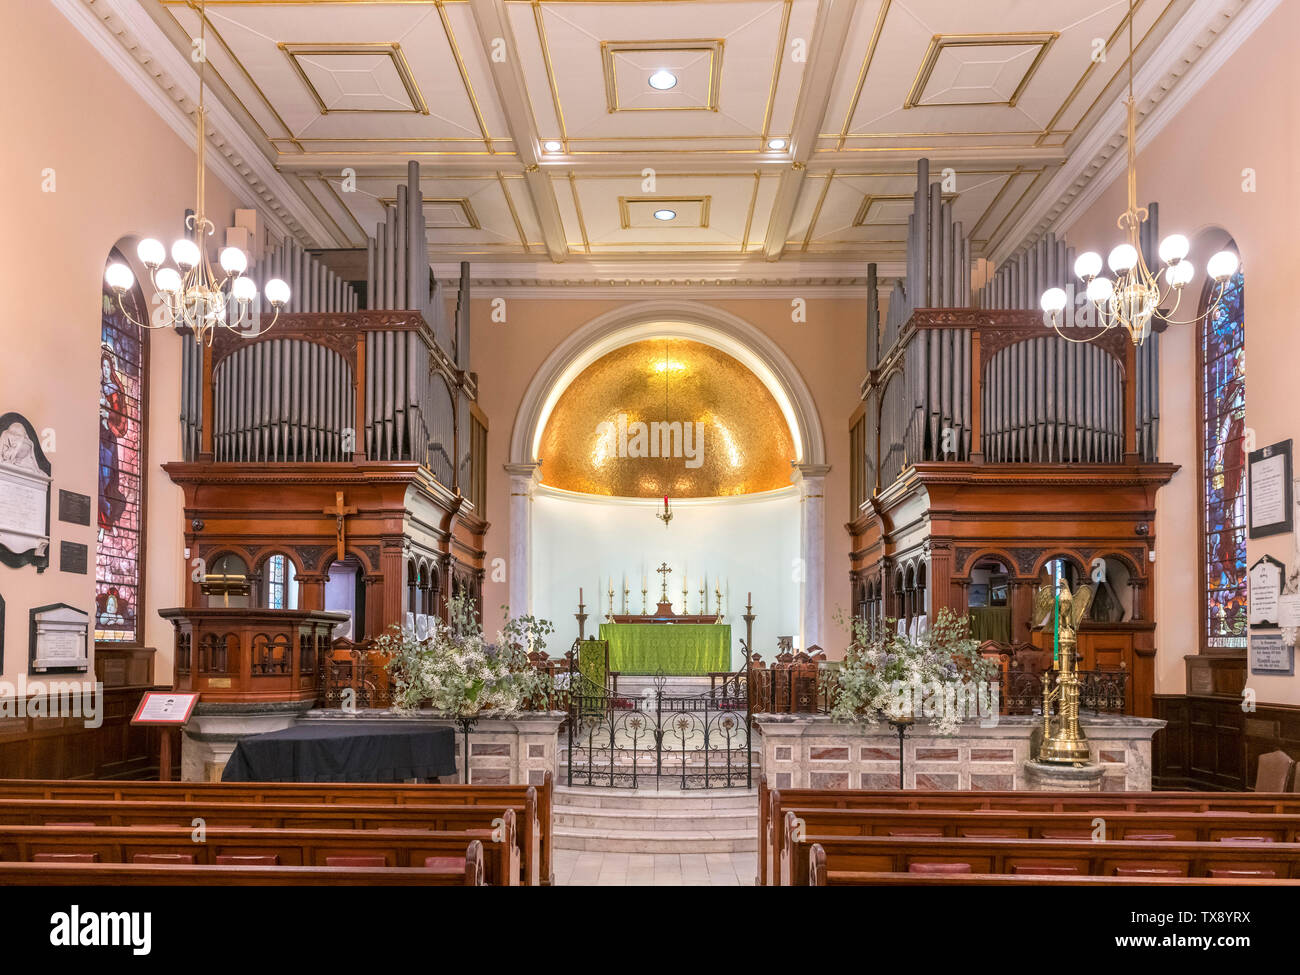 Interior of historic St James Church, King Street, Central Business District, Sydney, Australia Stock Photo